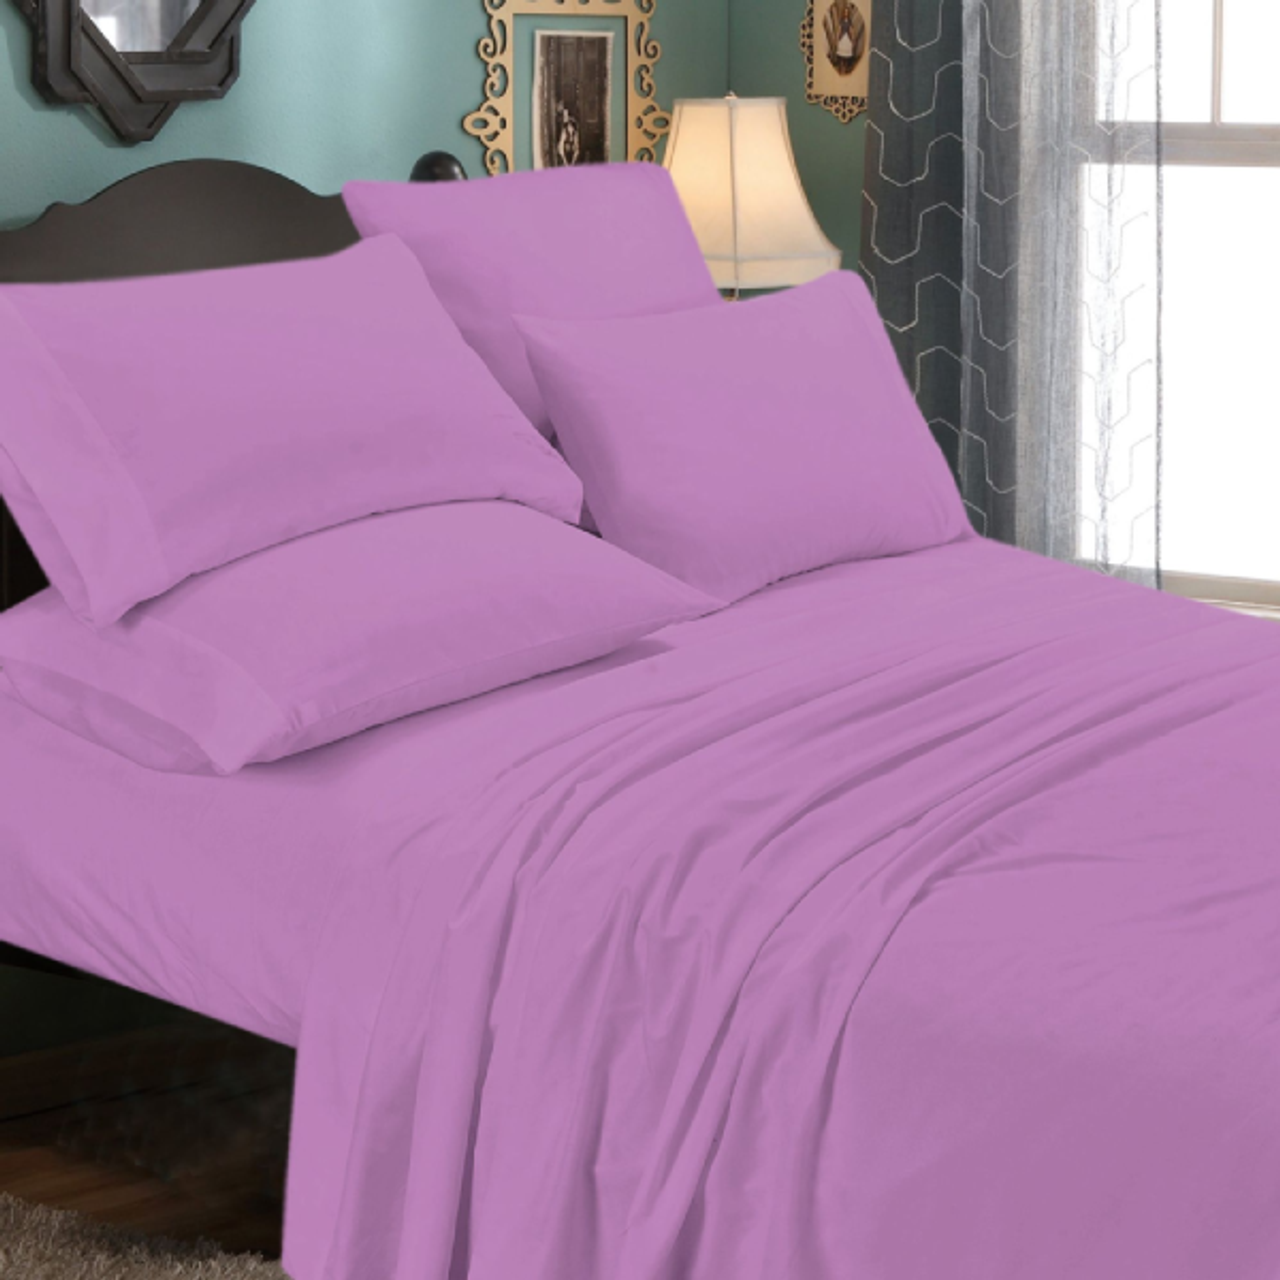 6-Piece Luxurious Super Soft Deep Pocket Premium Bed Sheet Set product image